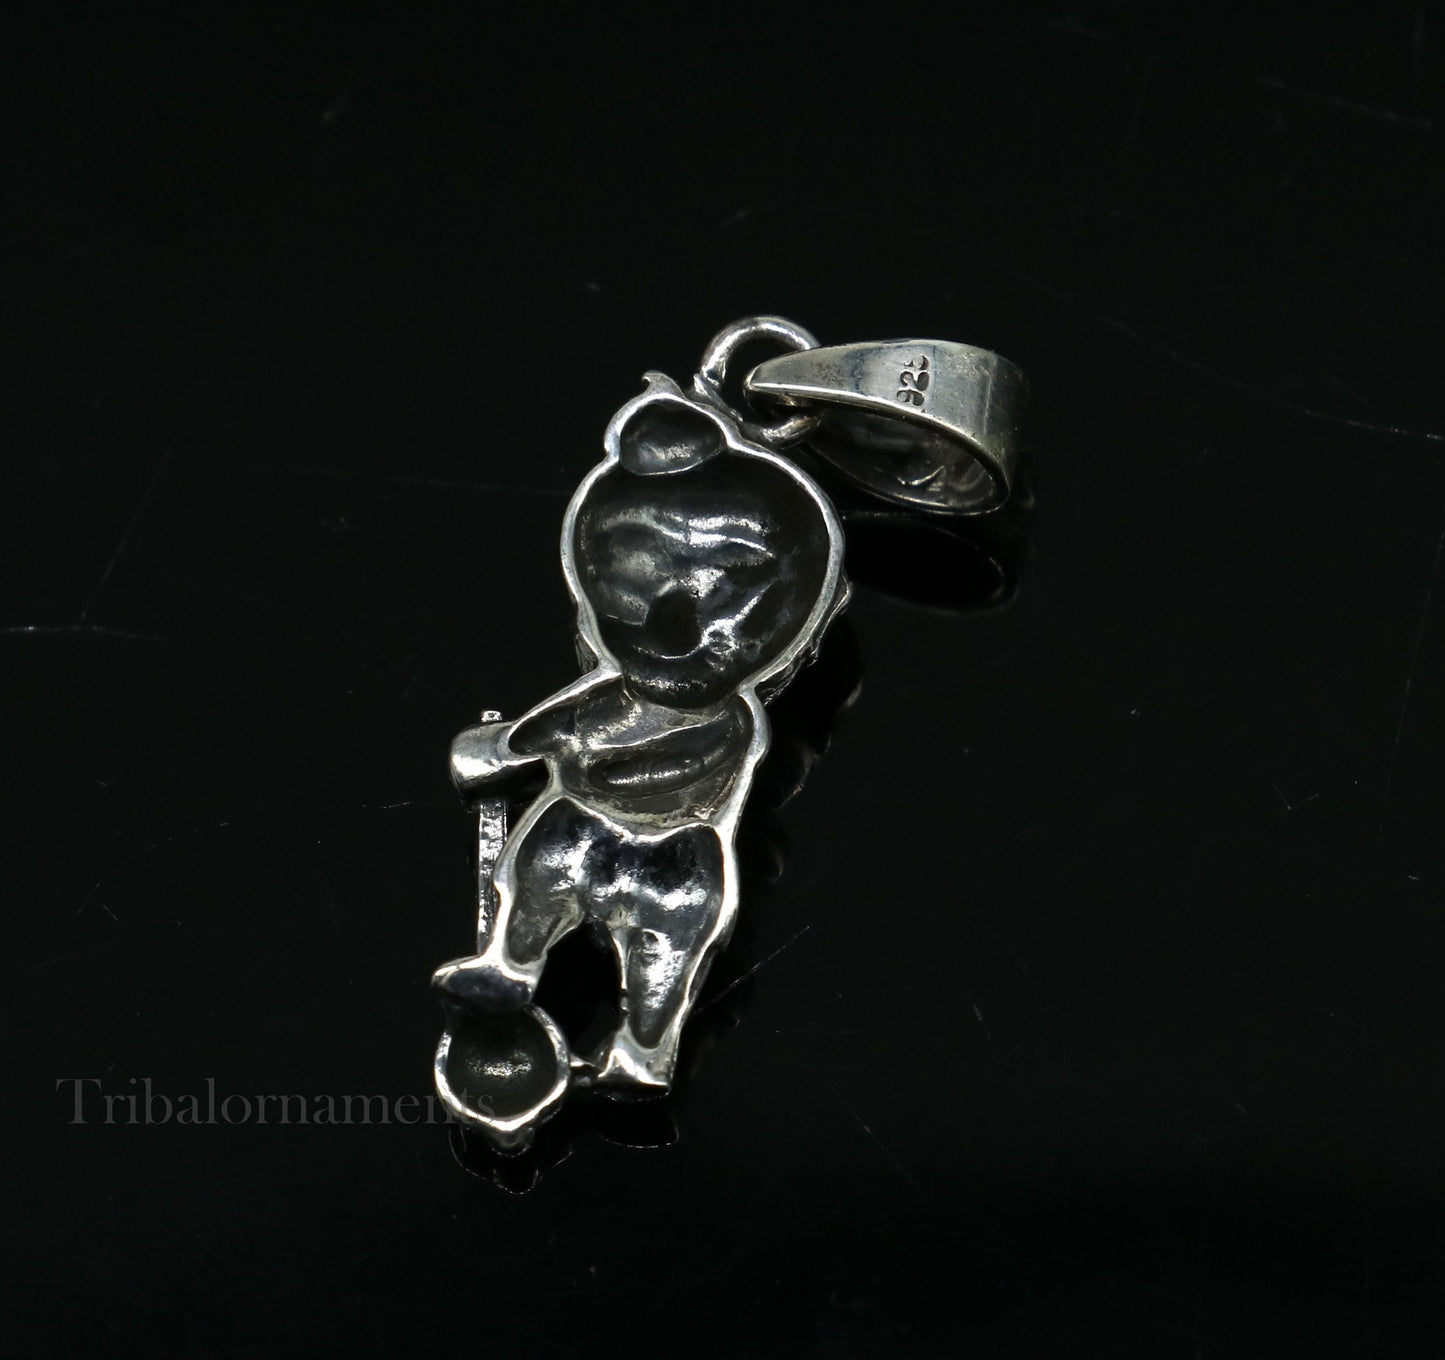 Pure 925 sterling silver handmade Hindu god Lord Bal Hanuman pendant, amazing designer fabulous pendant unisex gifting jewelry ssp883 - TRIBAL ORNAMENTS